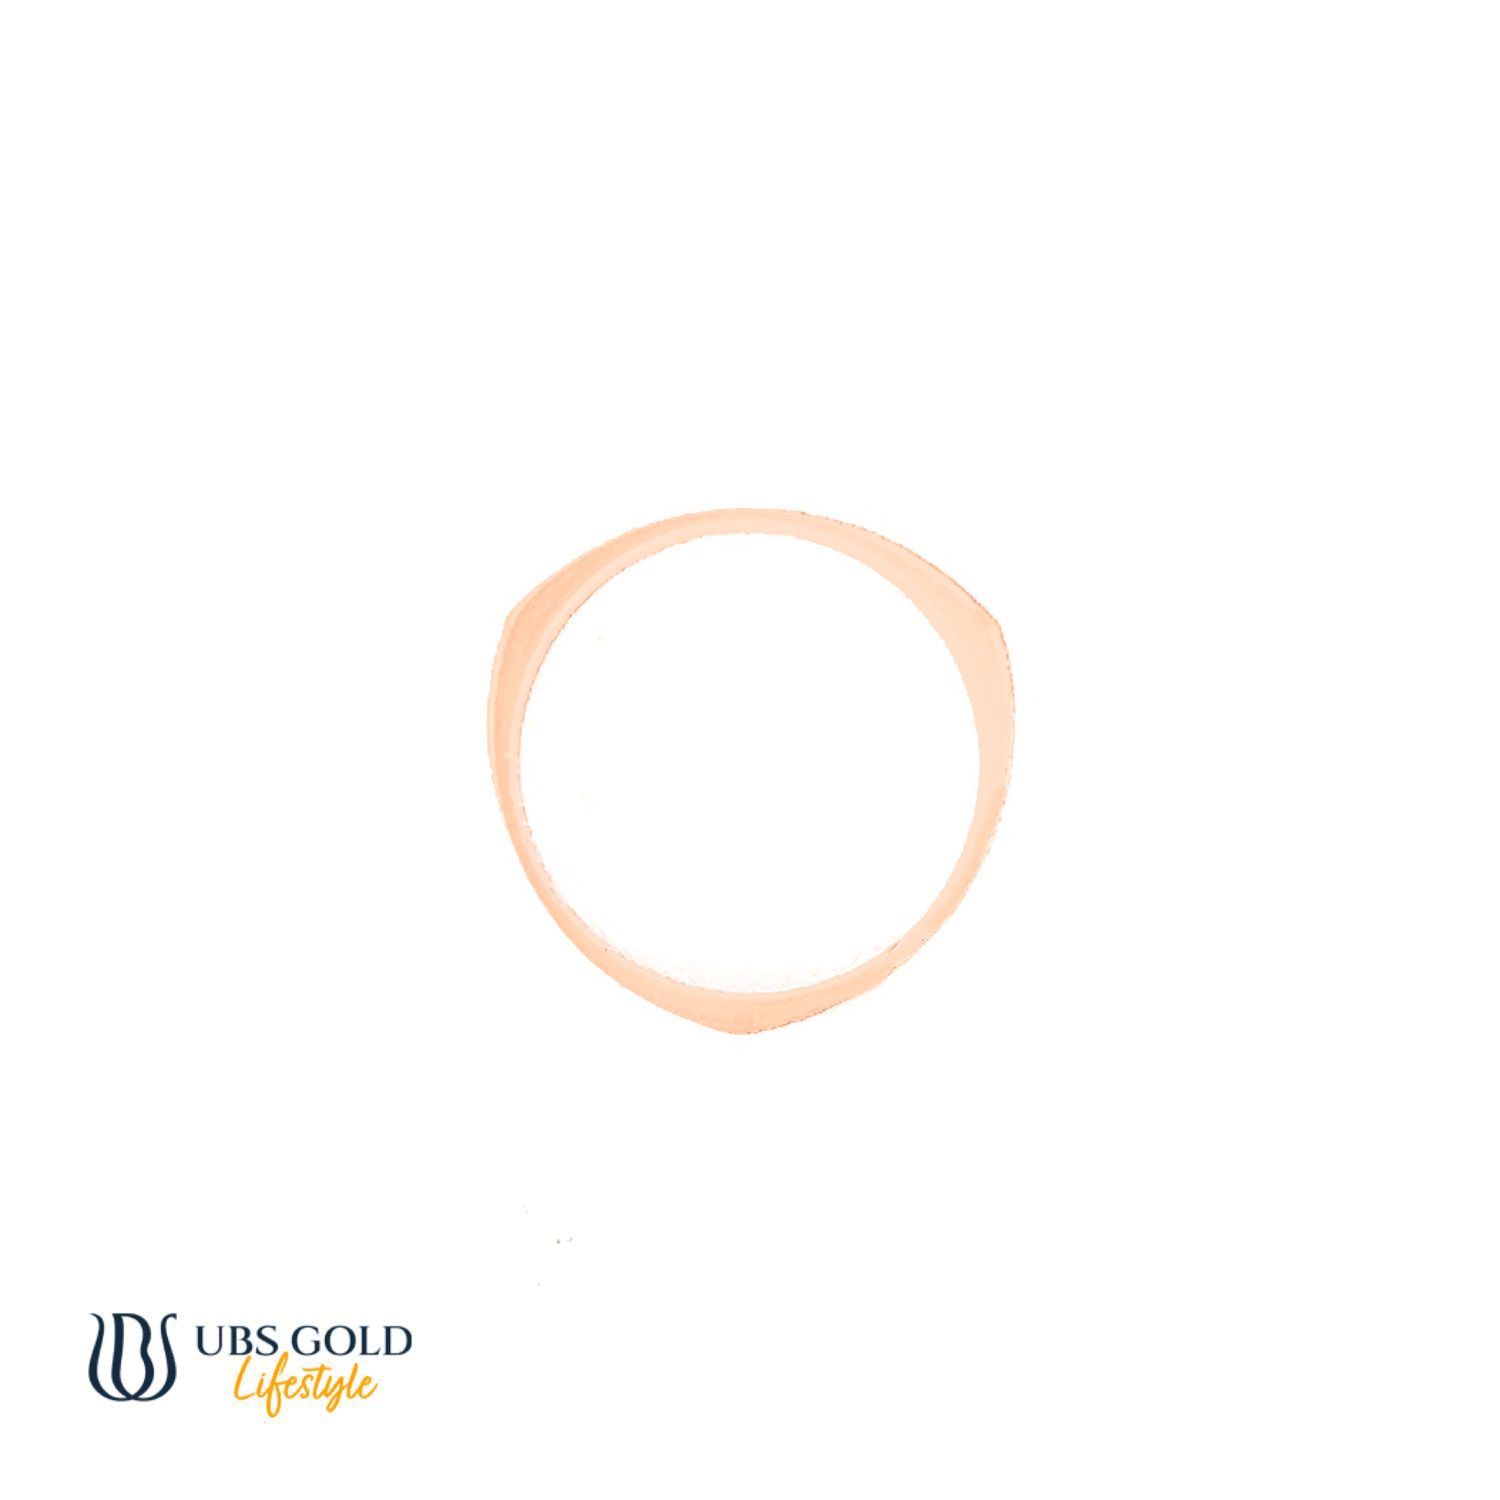 UBS Gold Cincin Emas - E7c0001 - 17K